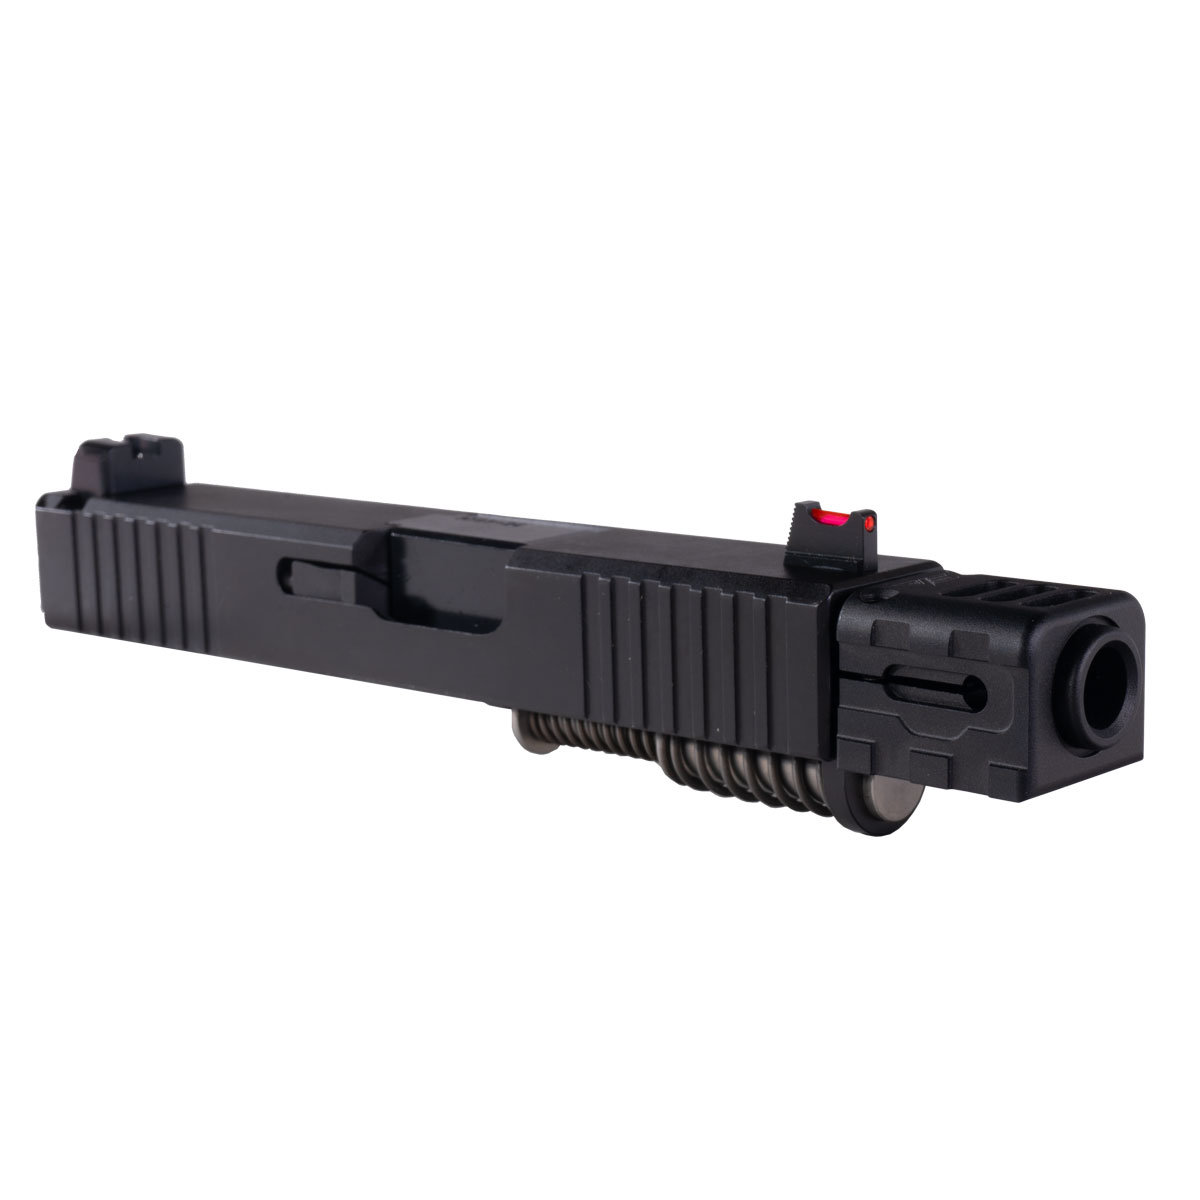 OTD 'Simum w/ Sylvan Arms Compensator' 9mm Complete Slide Kit - Glock 26 Gen 1-2 Compatible